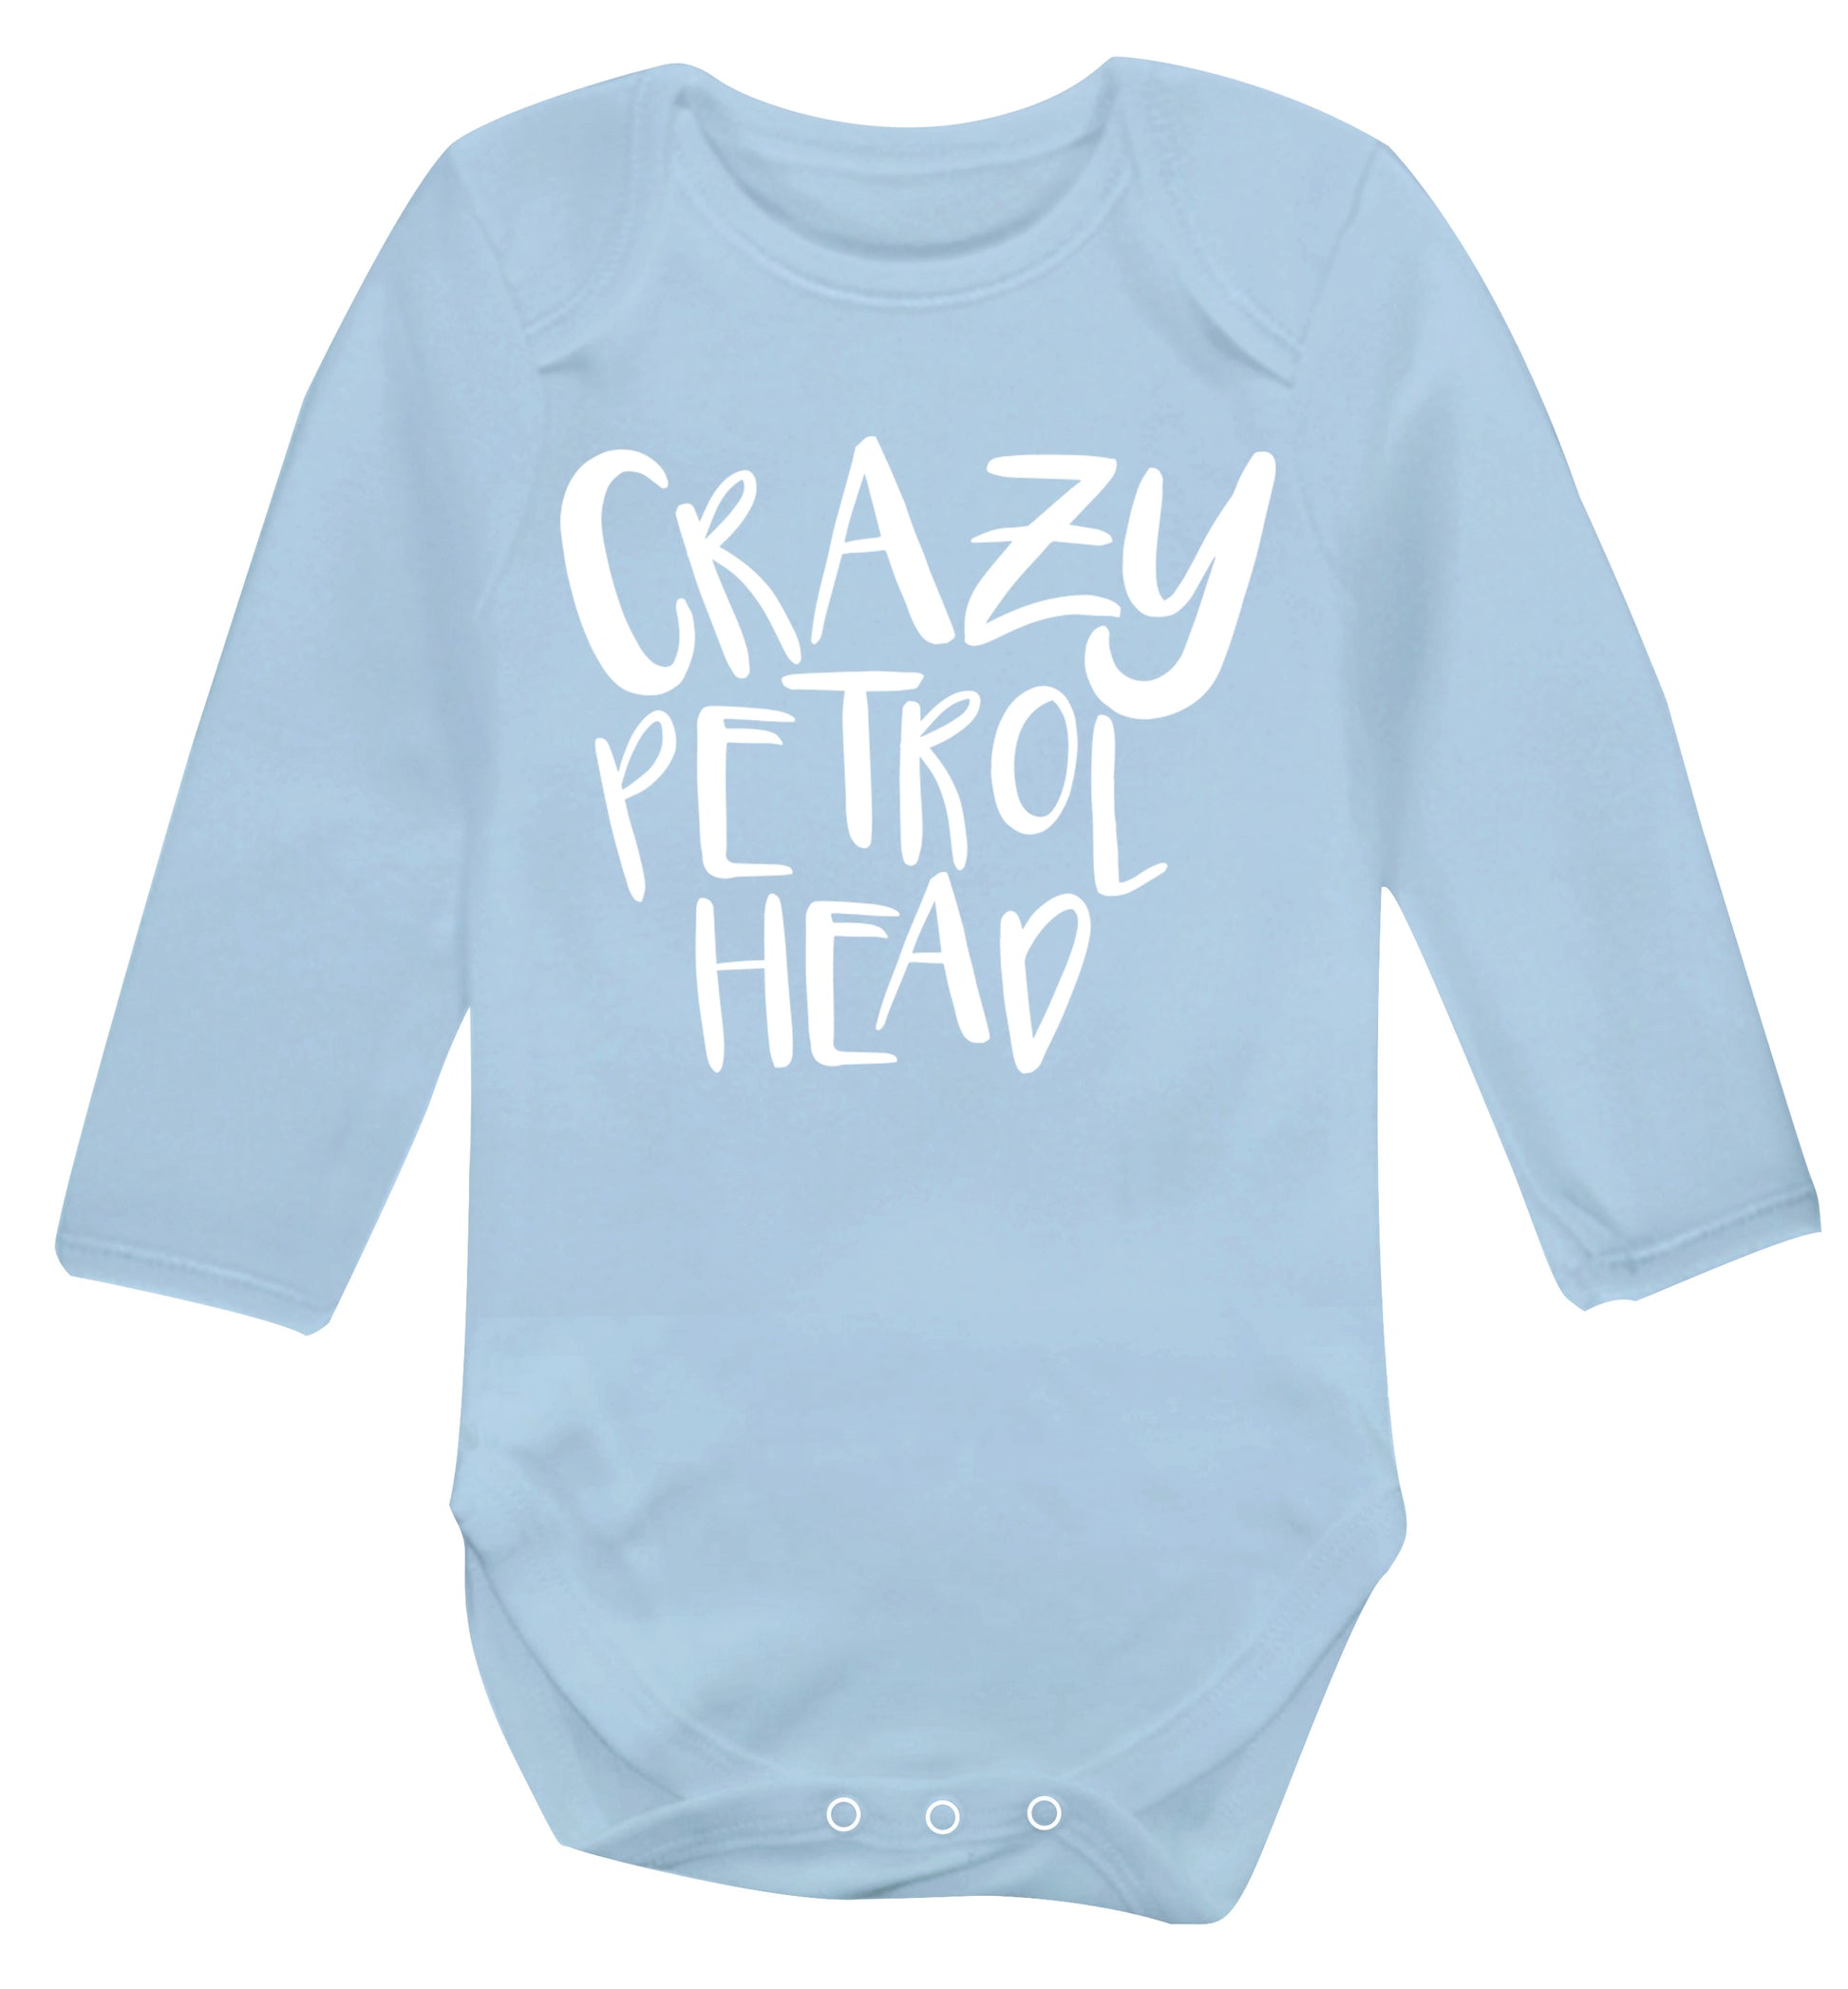 Crazy petrol head Baby Vest long sleeved pale blue 6-12 months